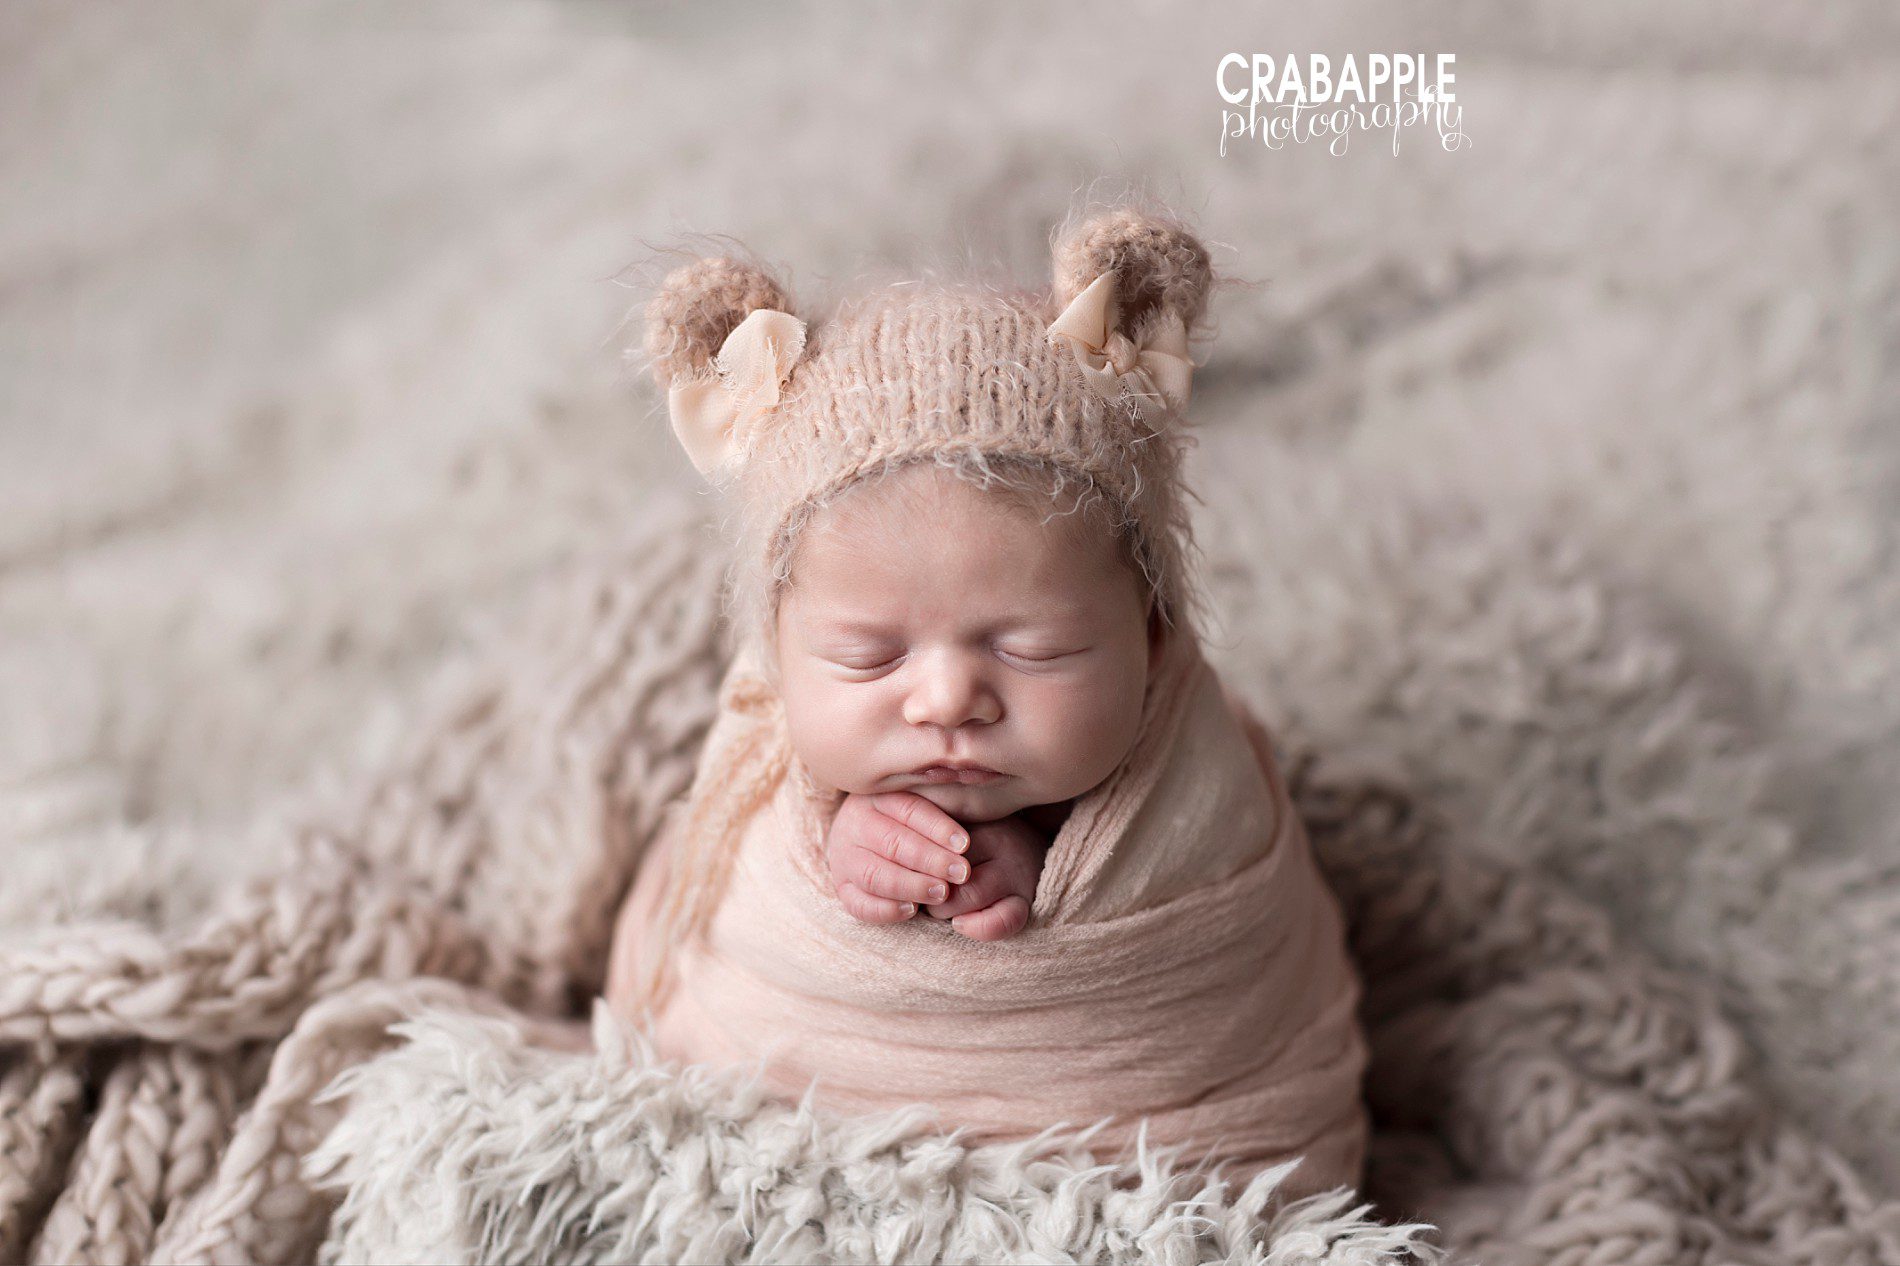 pose ideas for newborn portraits